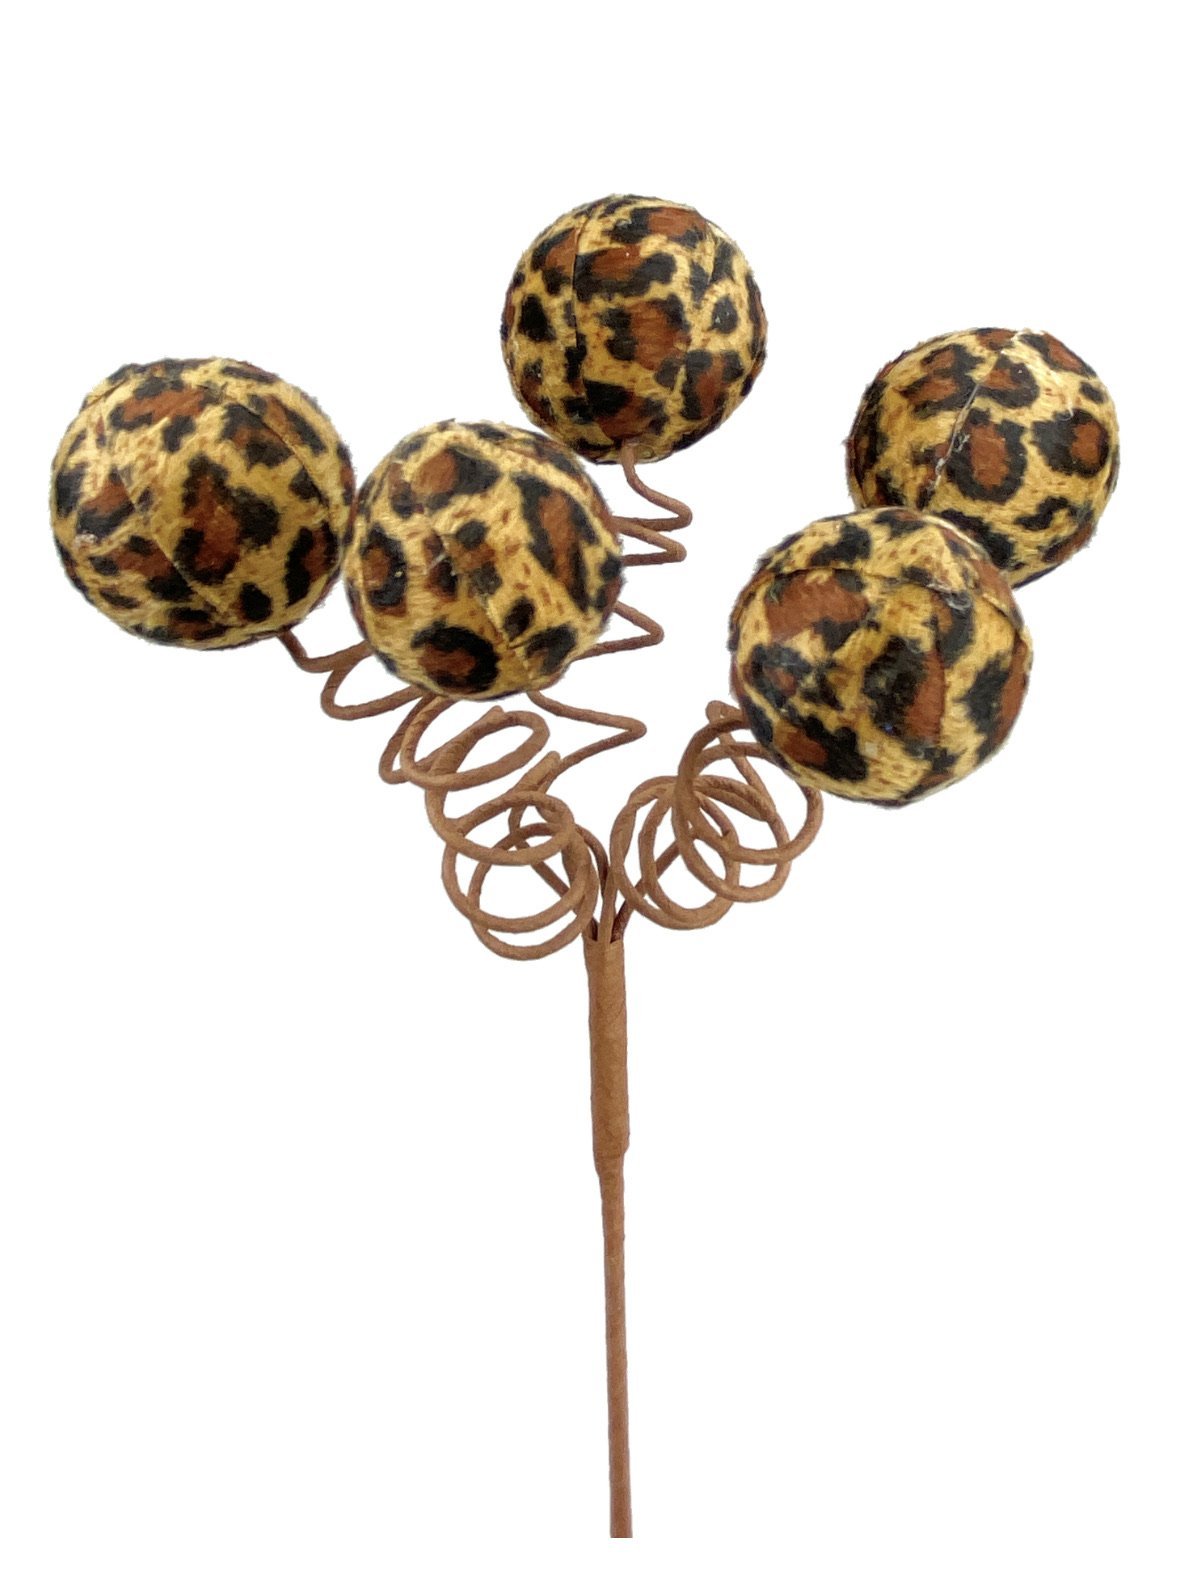 Leopard ball ornaments - 4”